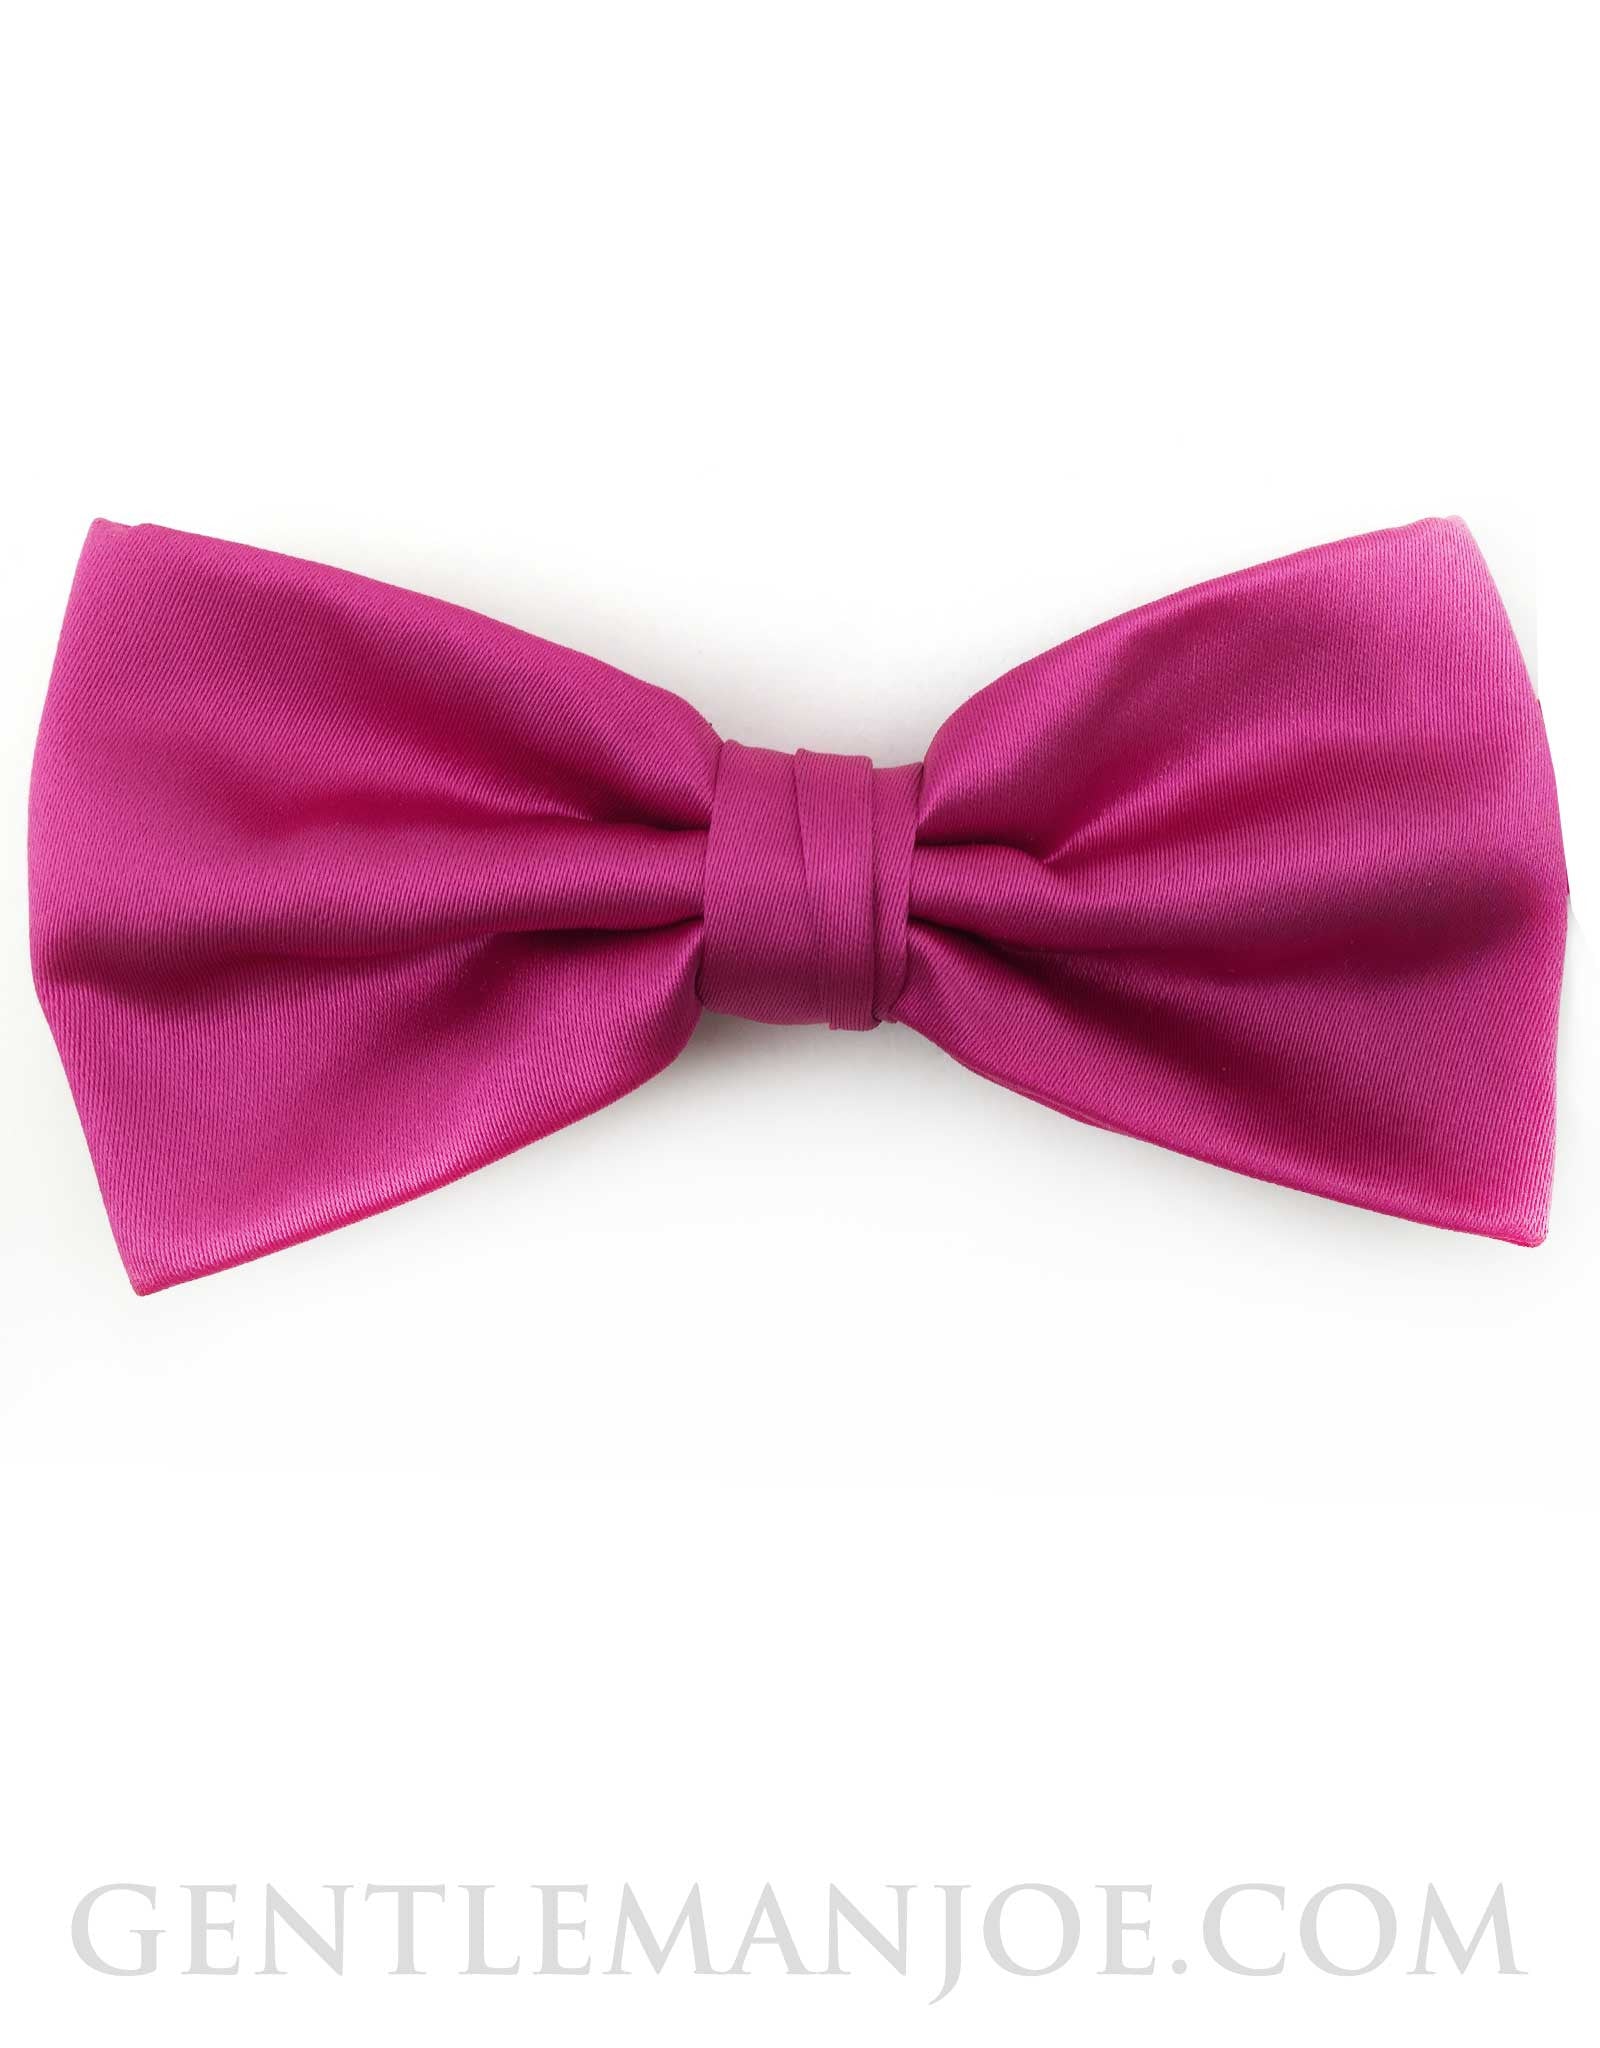 Hot pink bow ties